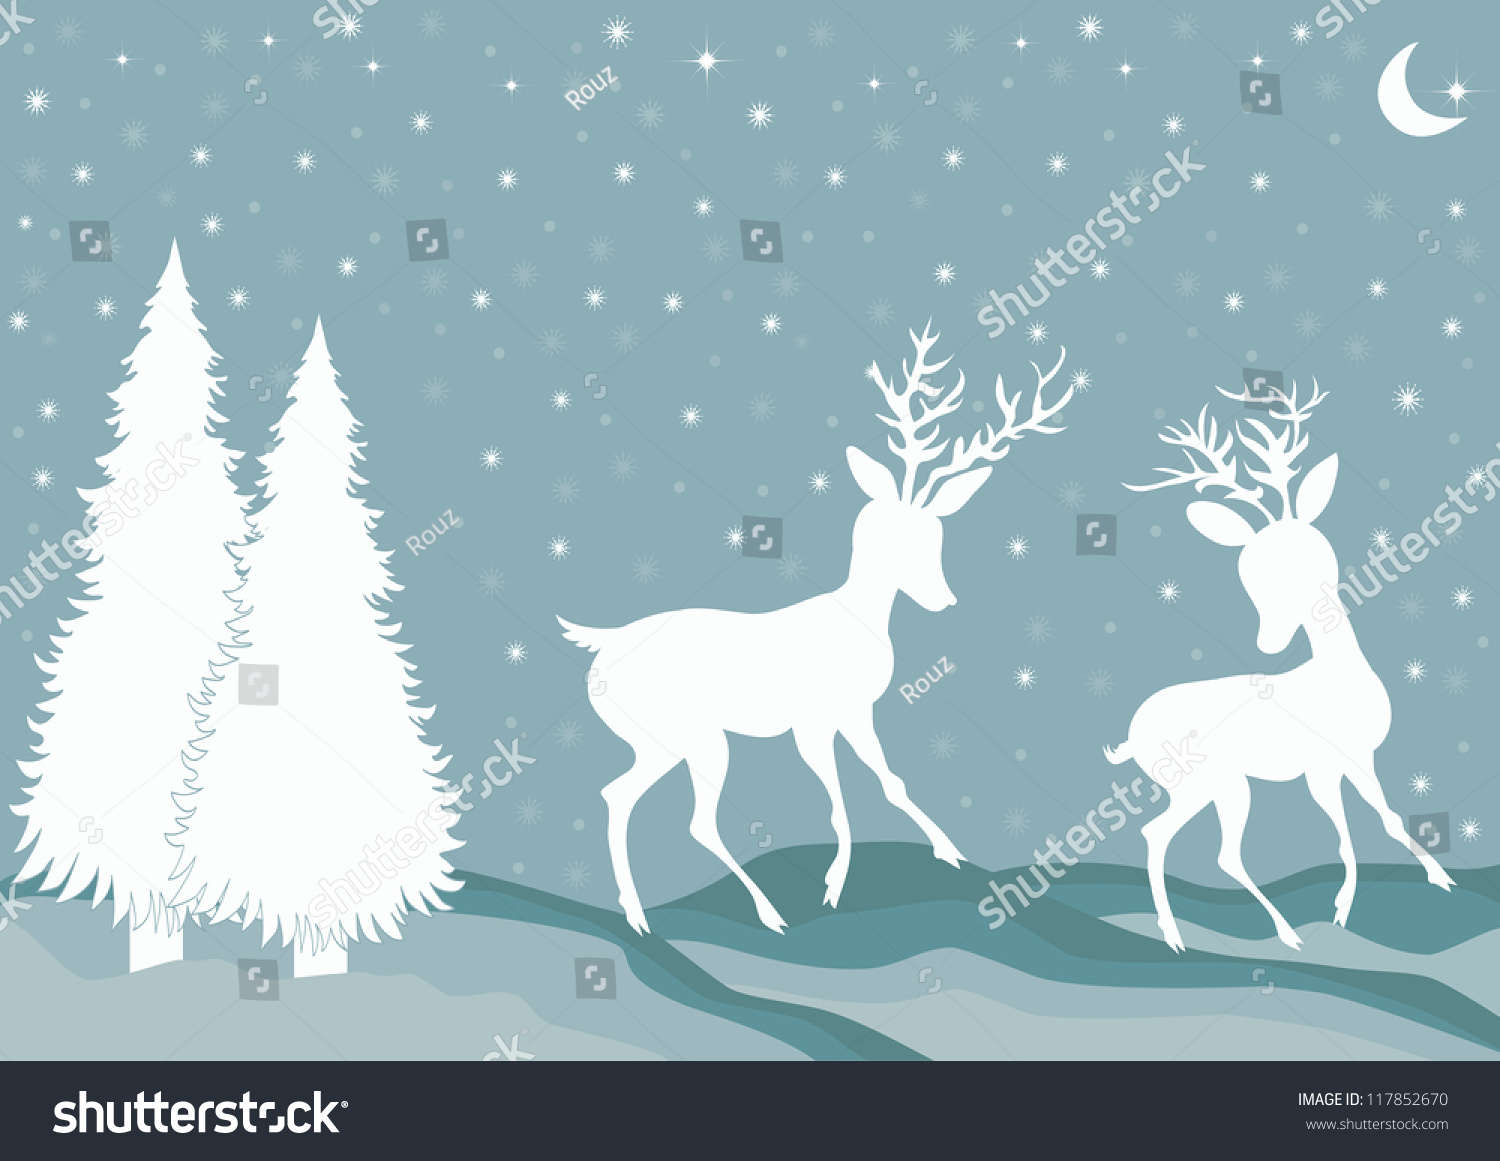 Winter Stock Vector Illustration 117852670 : Shutterstock